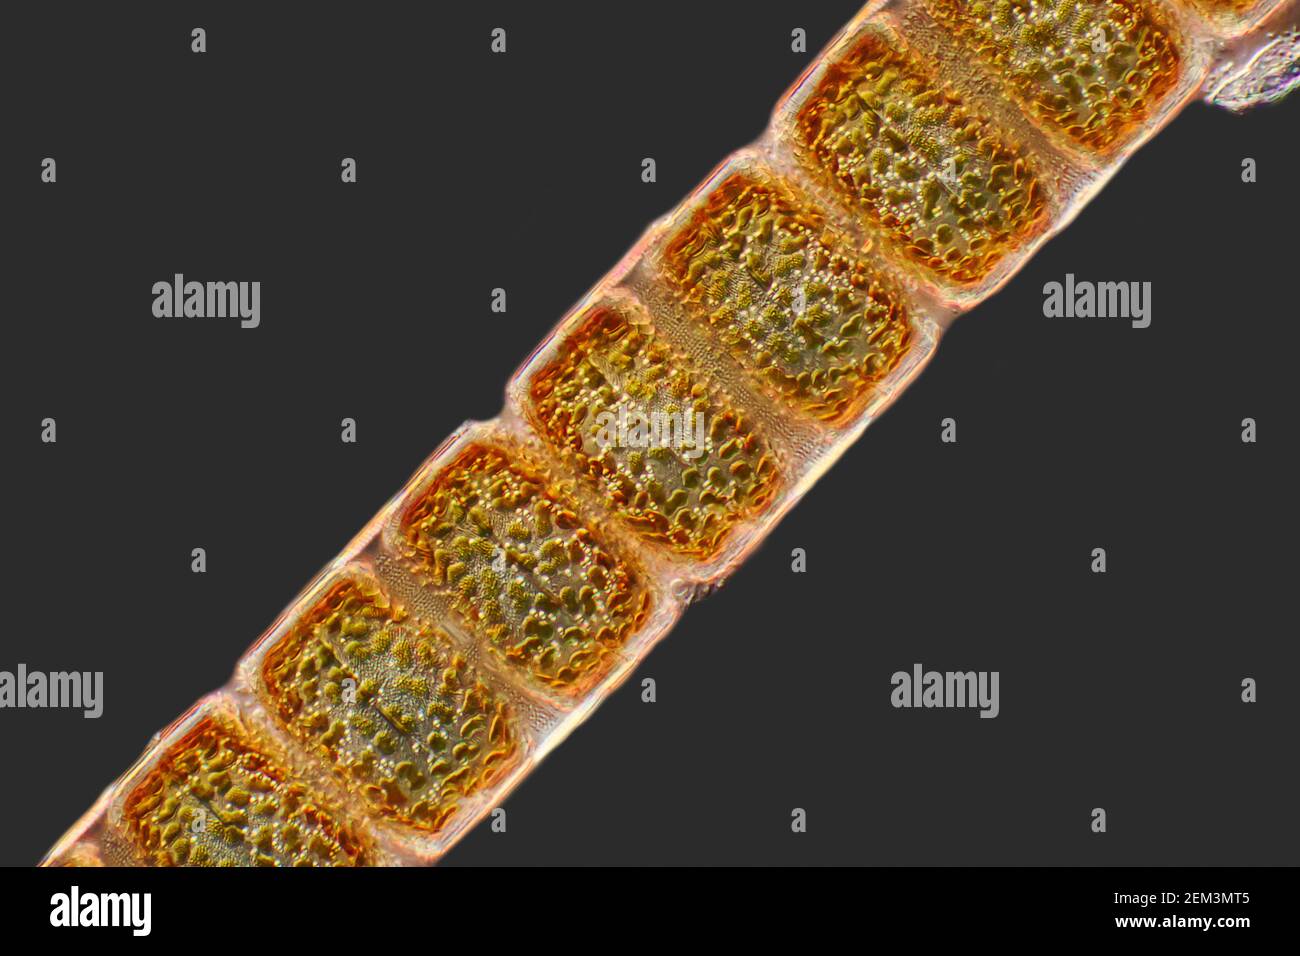 Kieselalge (Melosira moniliformis), Dunkelfeld-Mikroskopaufnahme, Vergrößerung: X100 bezogen auf 36mm, Deutschland Stockfoto